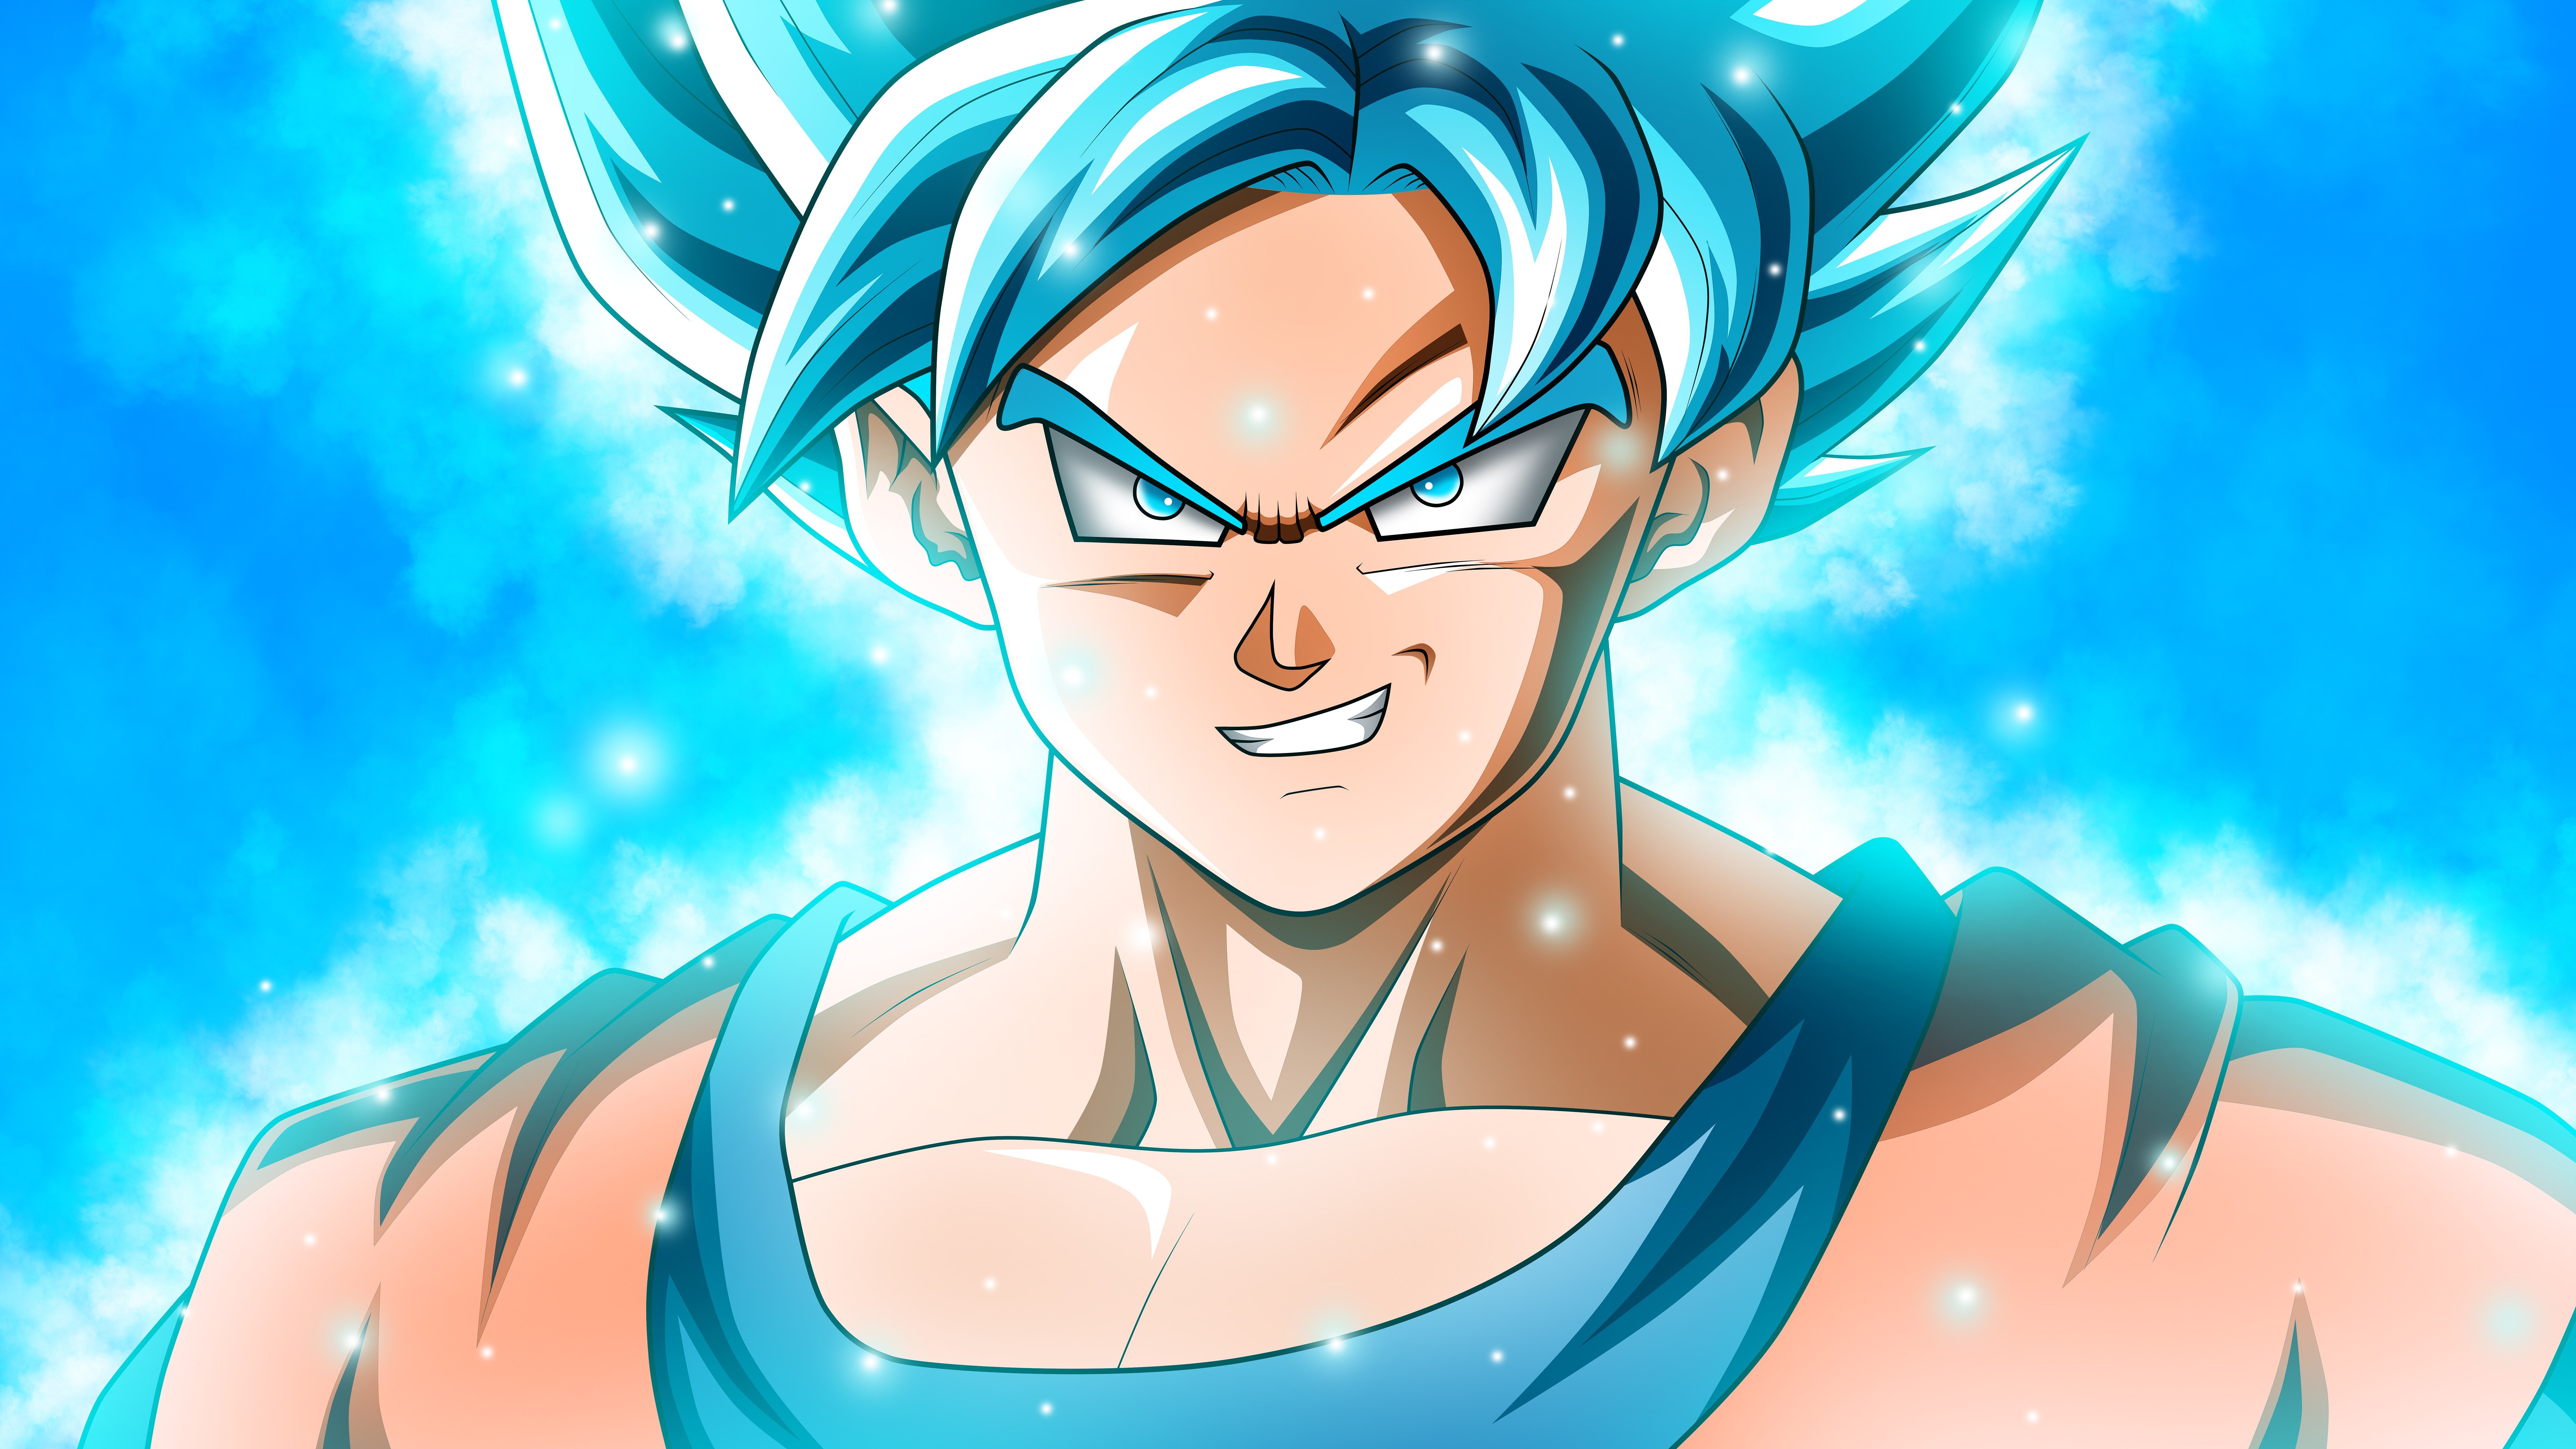 Anime Wallpaper Goku Super Saiyan Blue from Dragon Ball Super